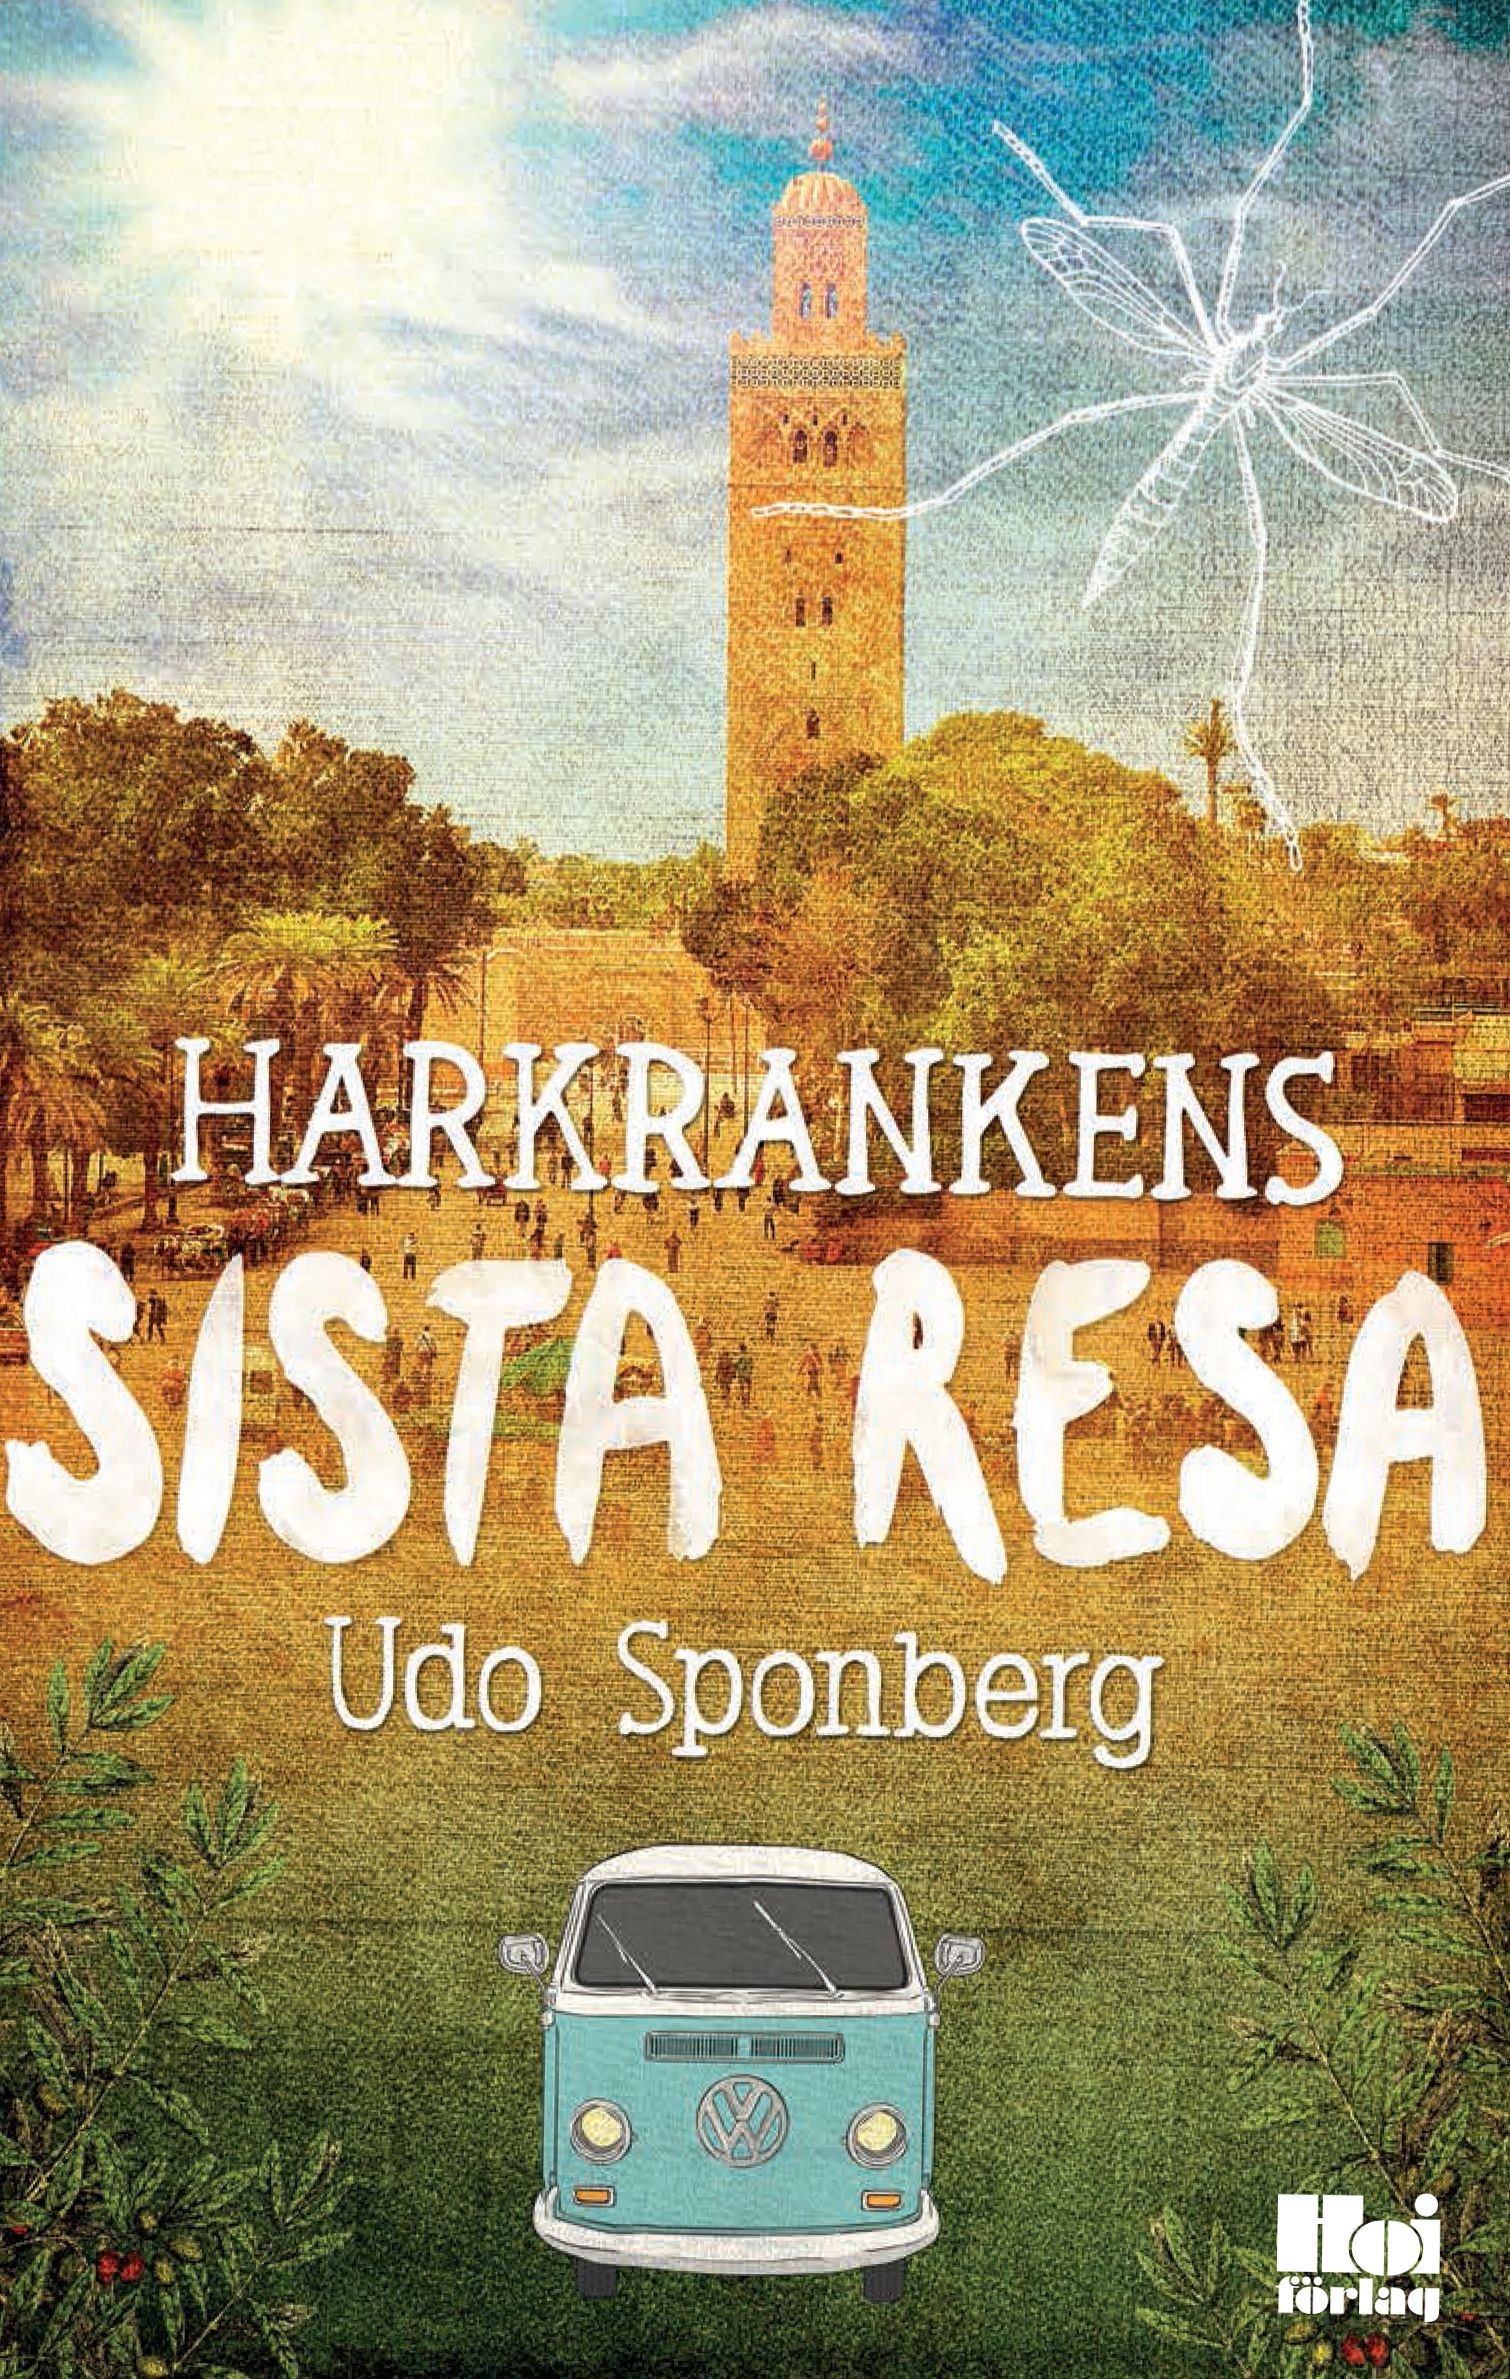 Harkrankens sista resa, e-bok av Udo Sponberg